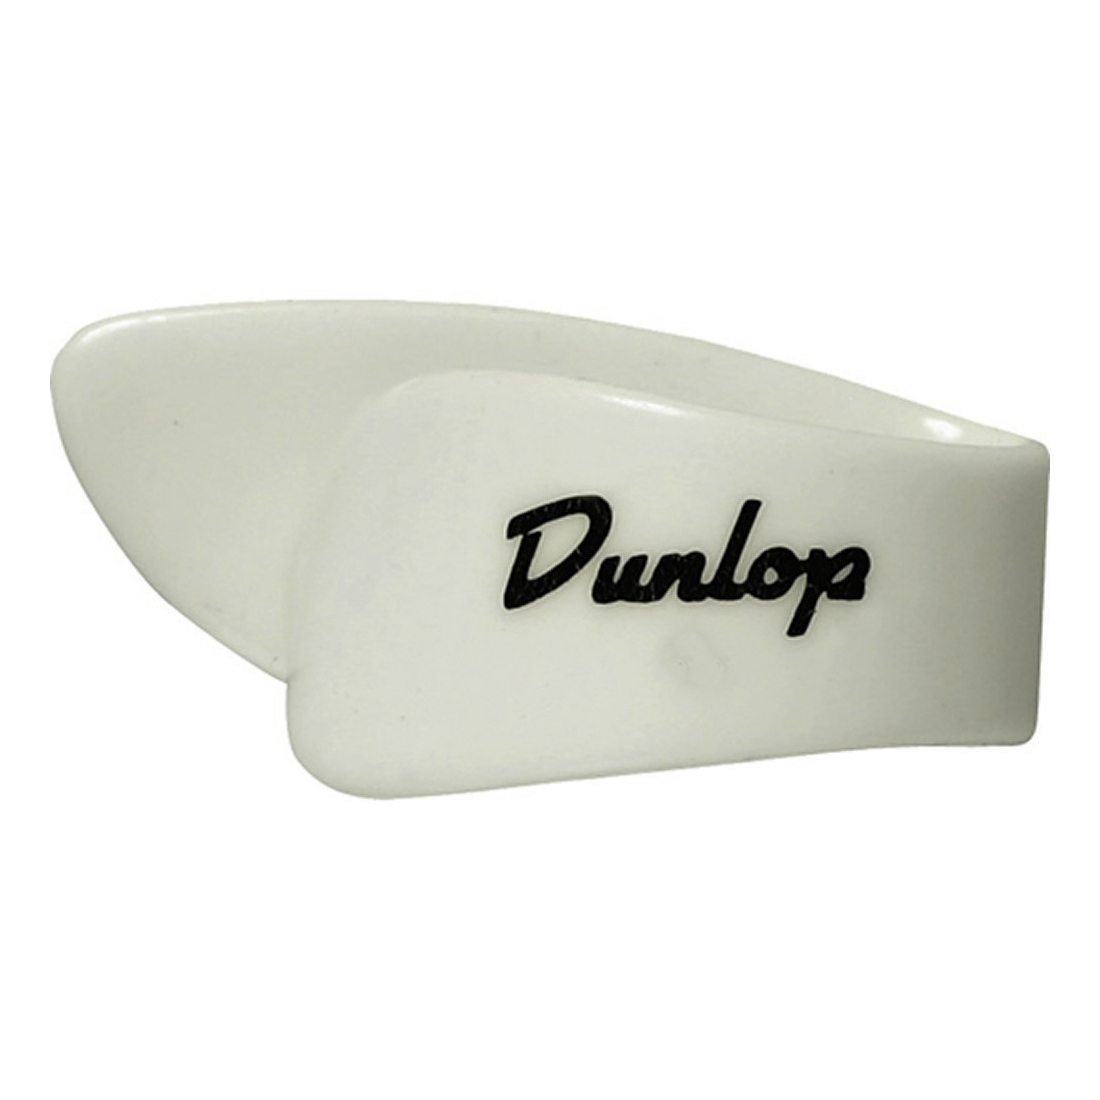 Dunlop - Onglet Blanc - 9003 L